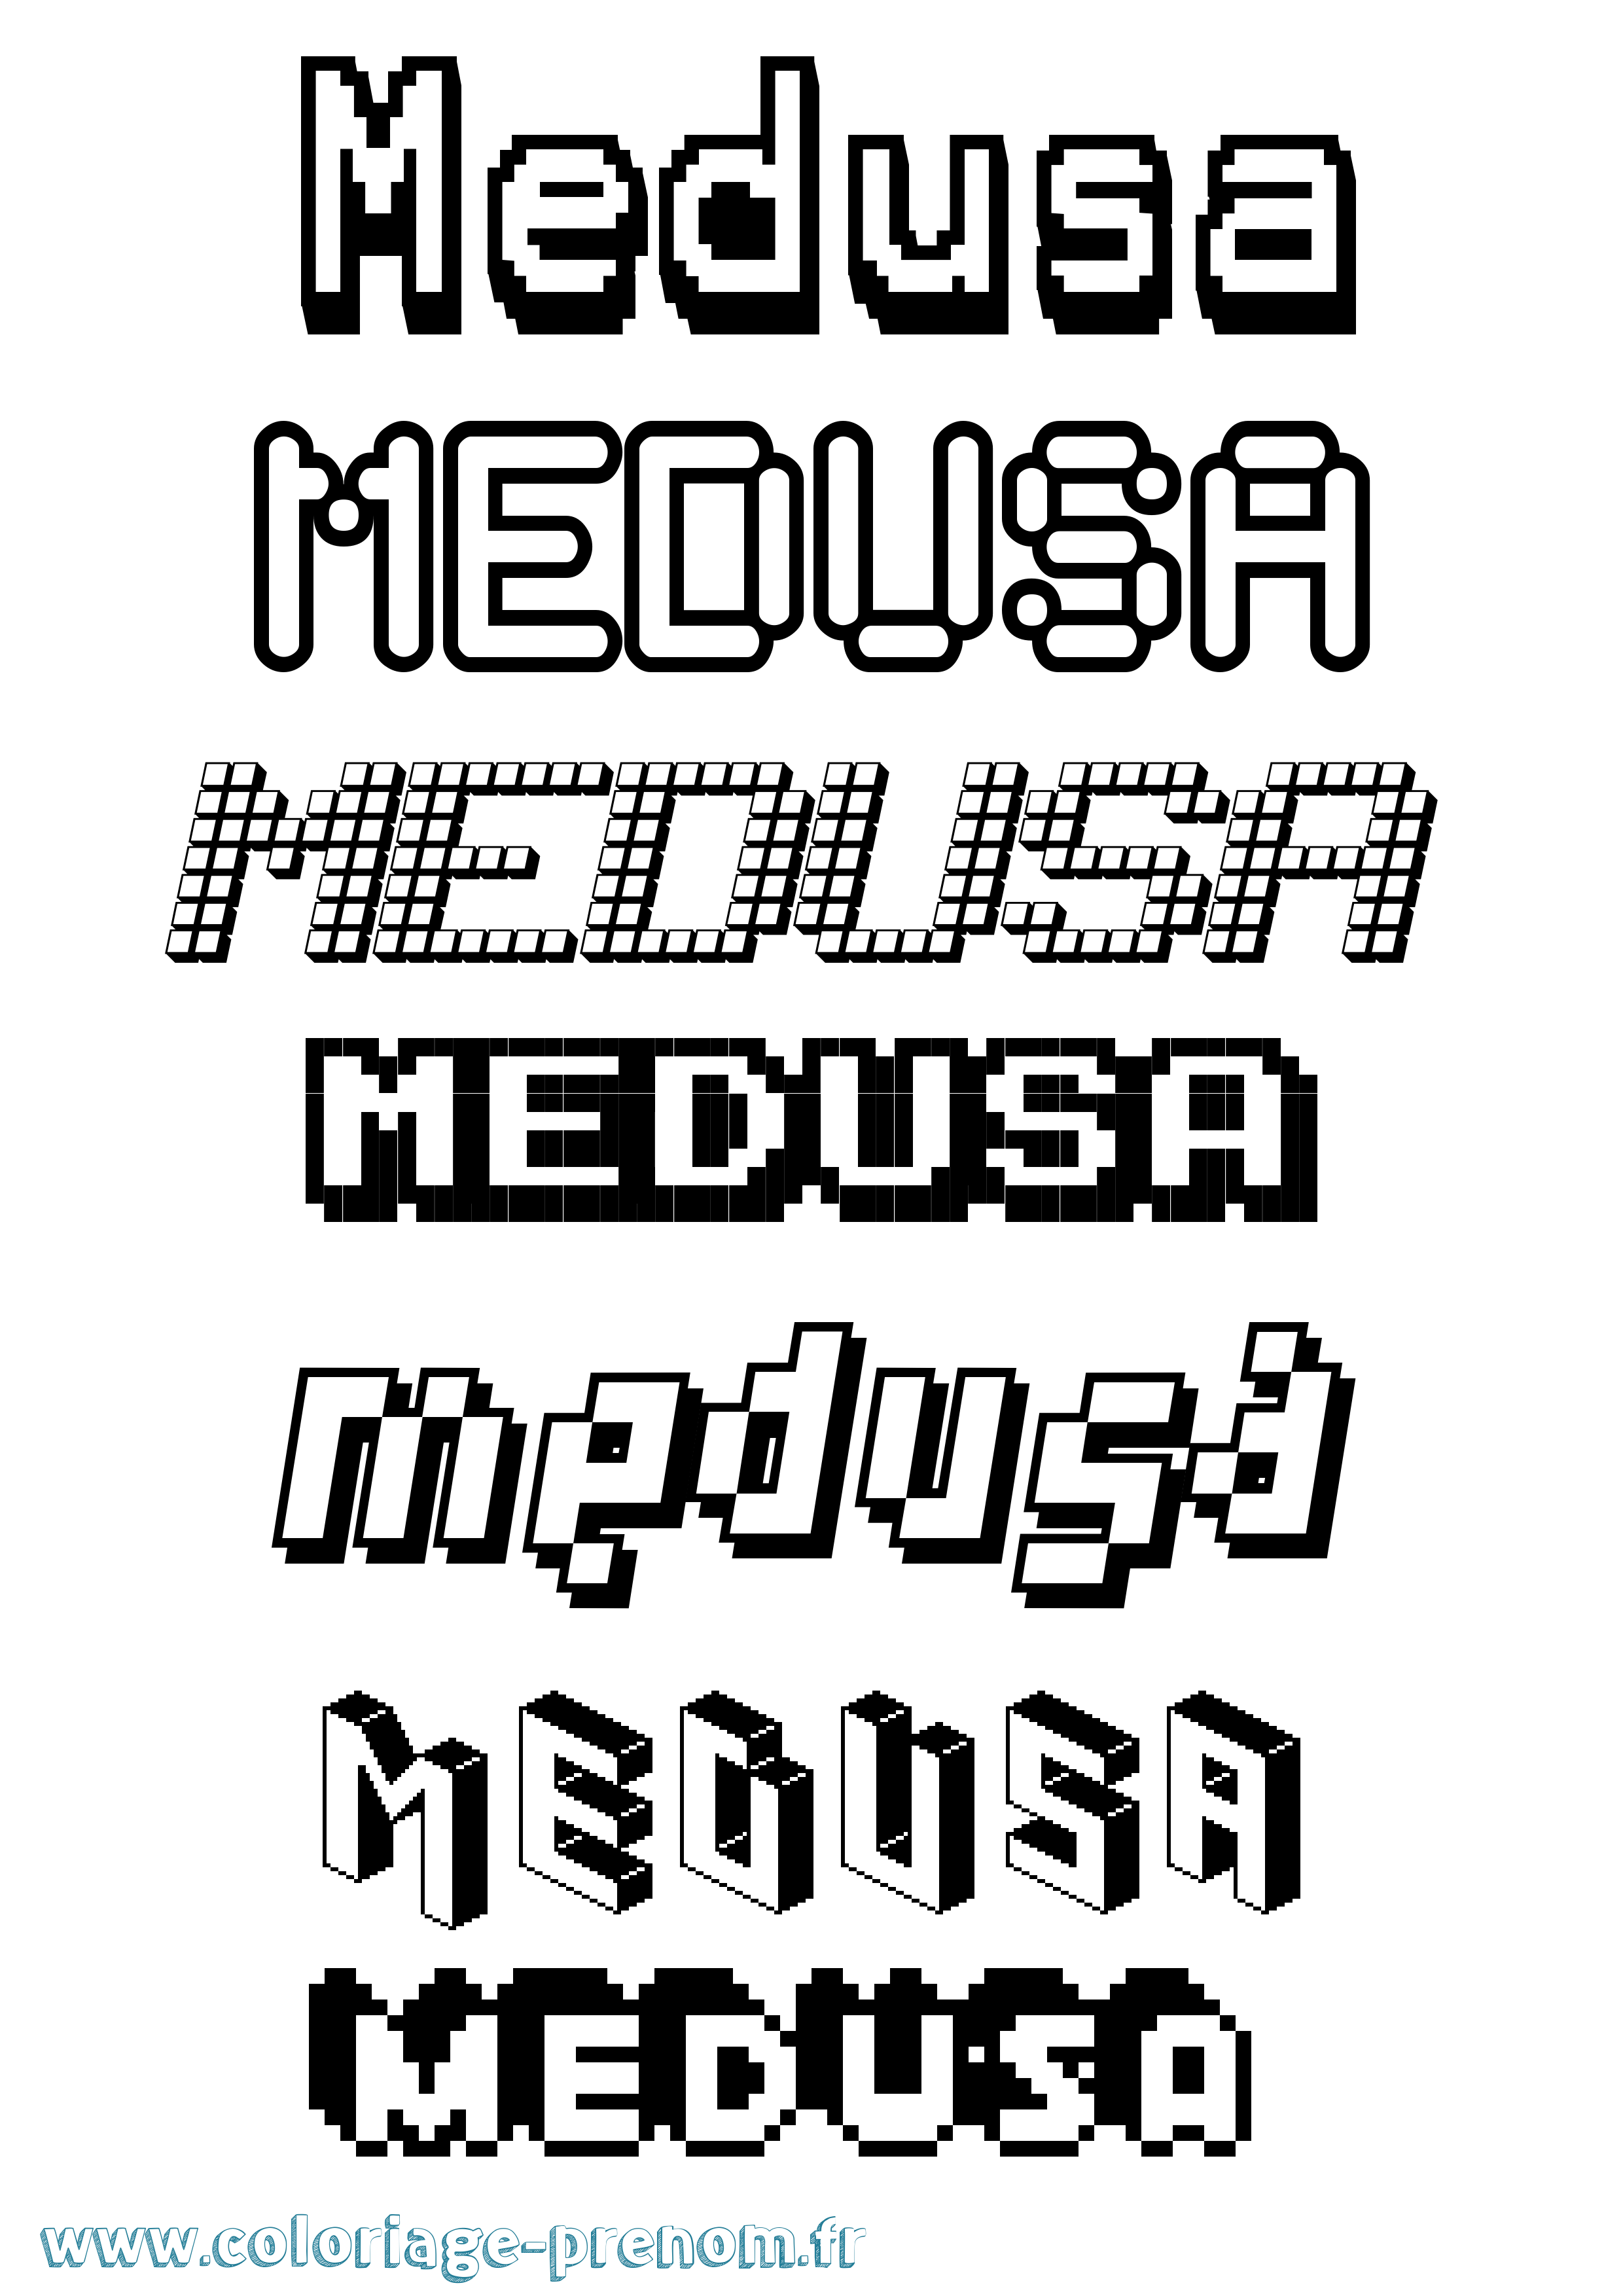 Coloriage prénom Medusa Pixel